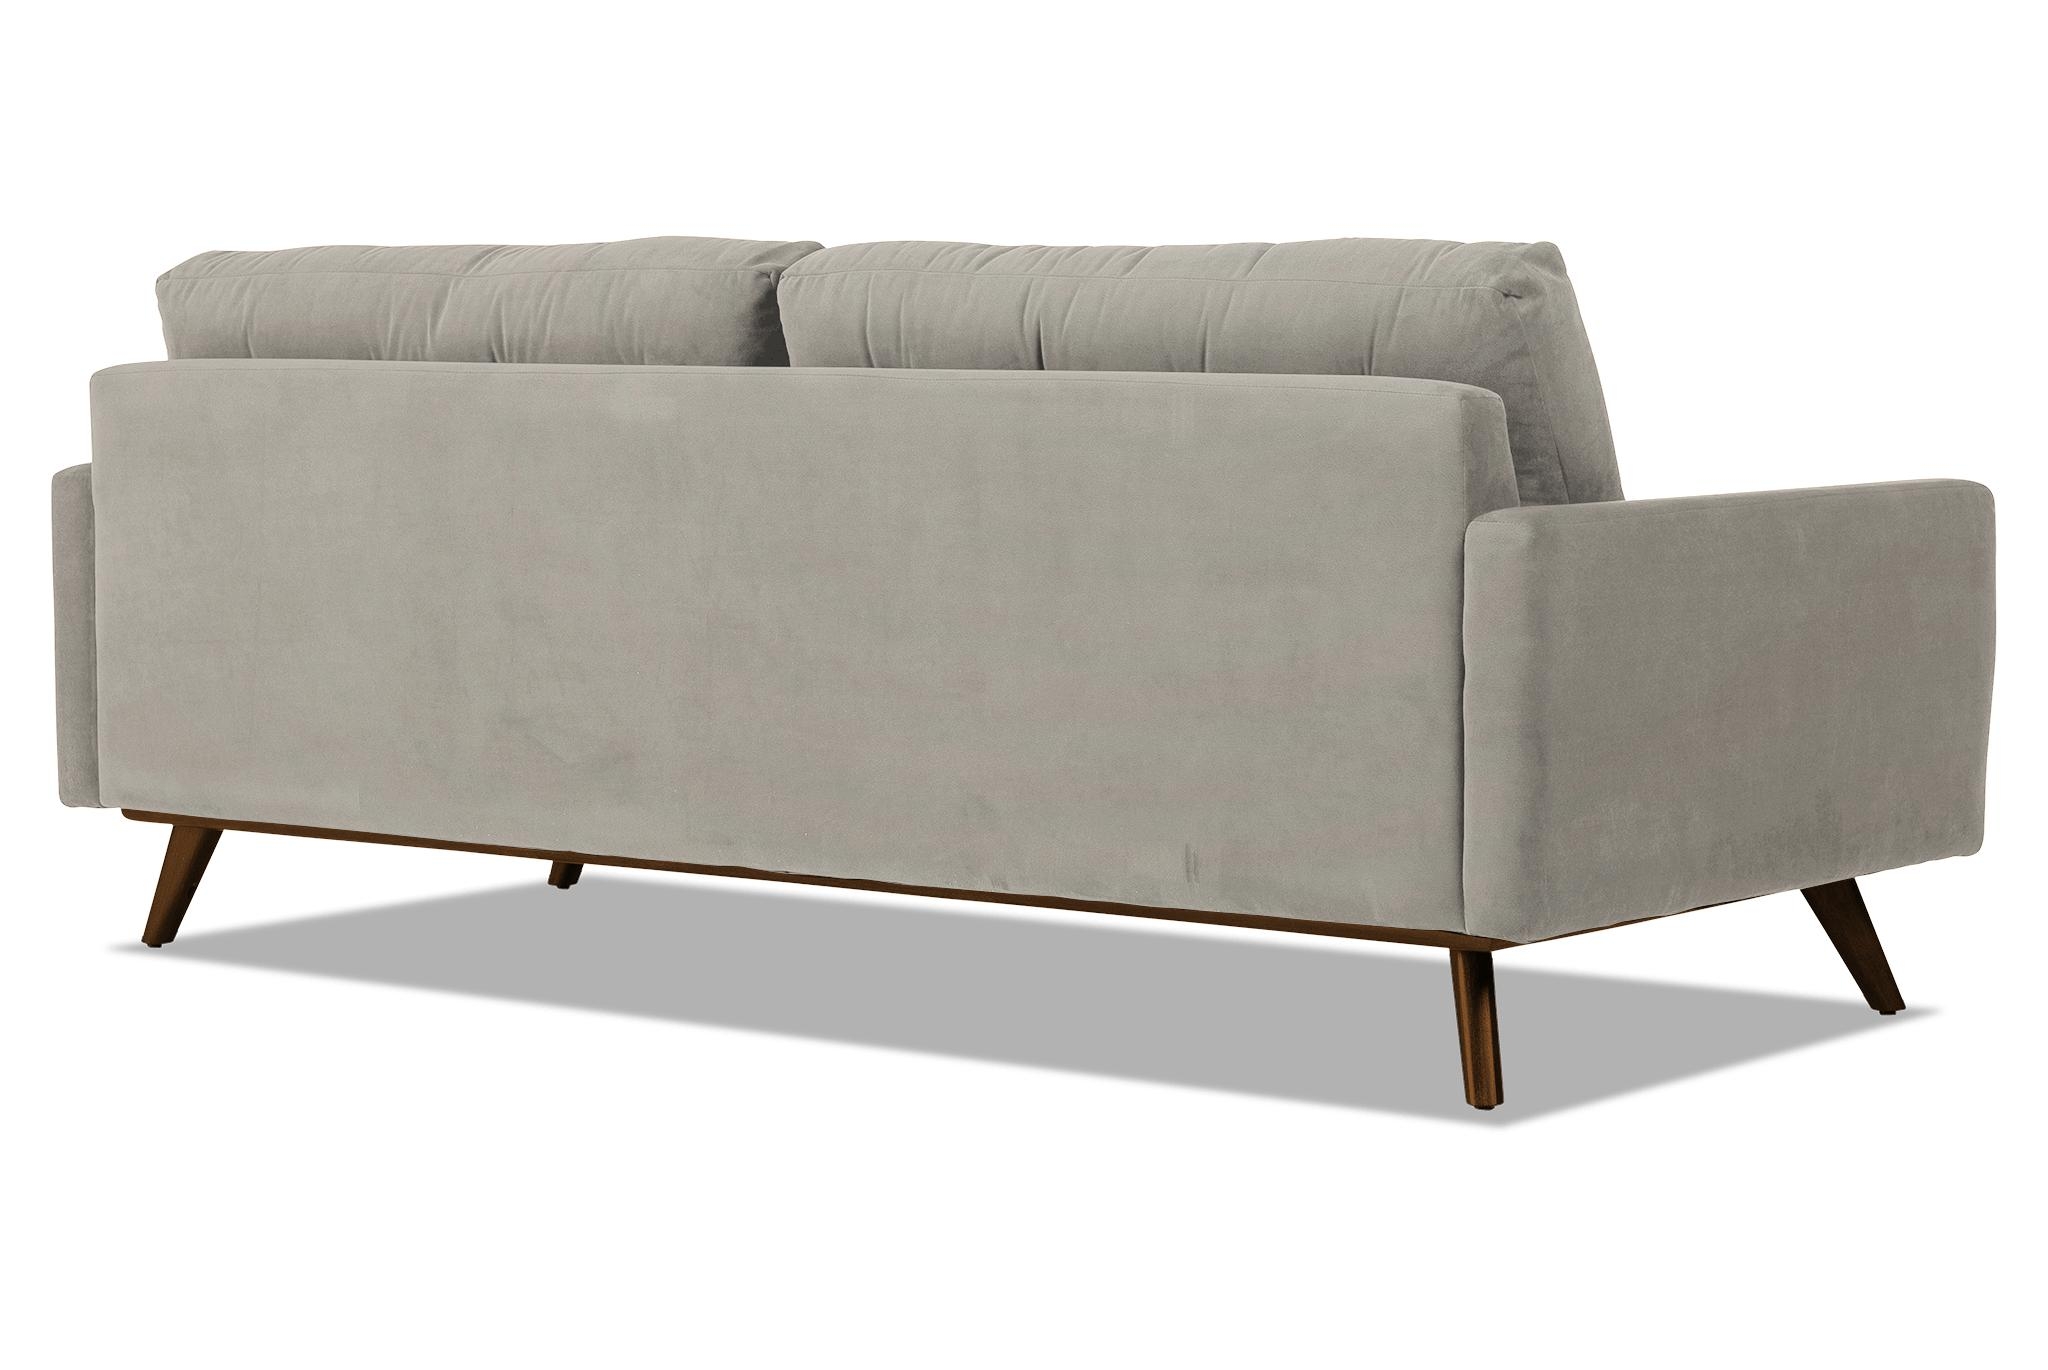 White Hopson Mid Century Modern Sofa - Bloke Cotton - Mocha - Image 3